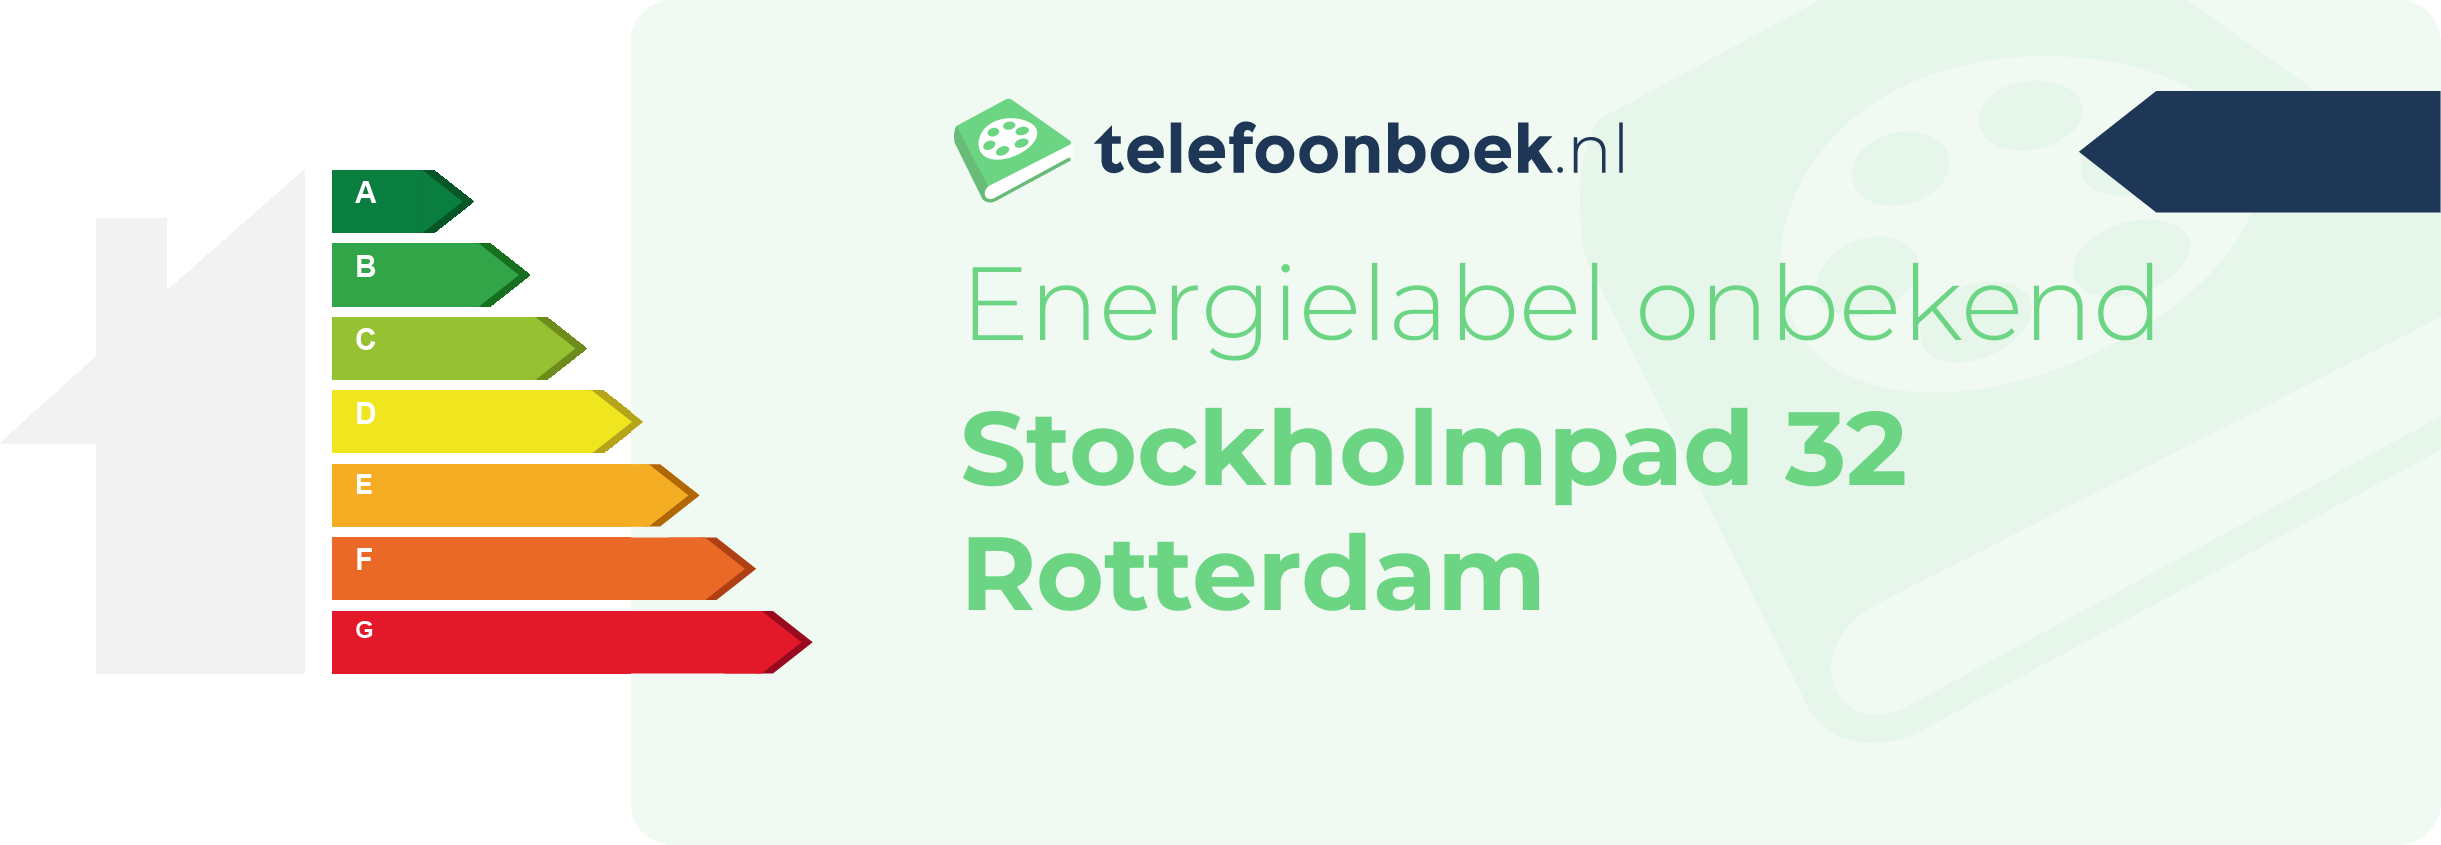 Energielabel Stockholmpad 32 Rotterdam